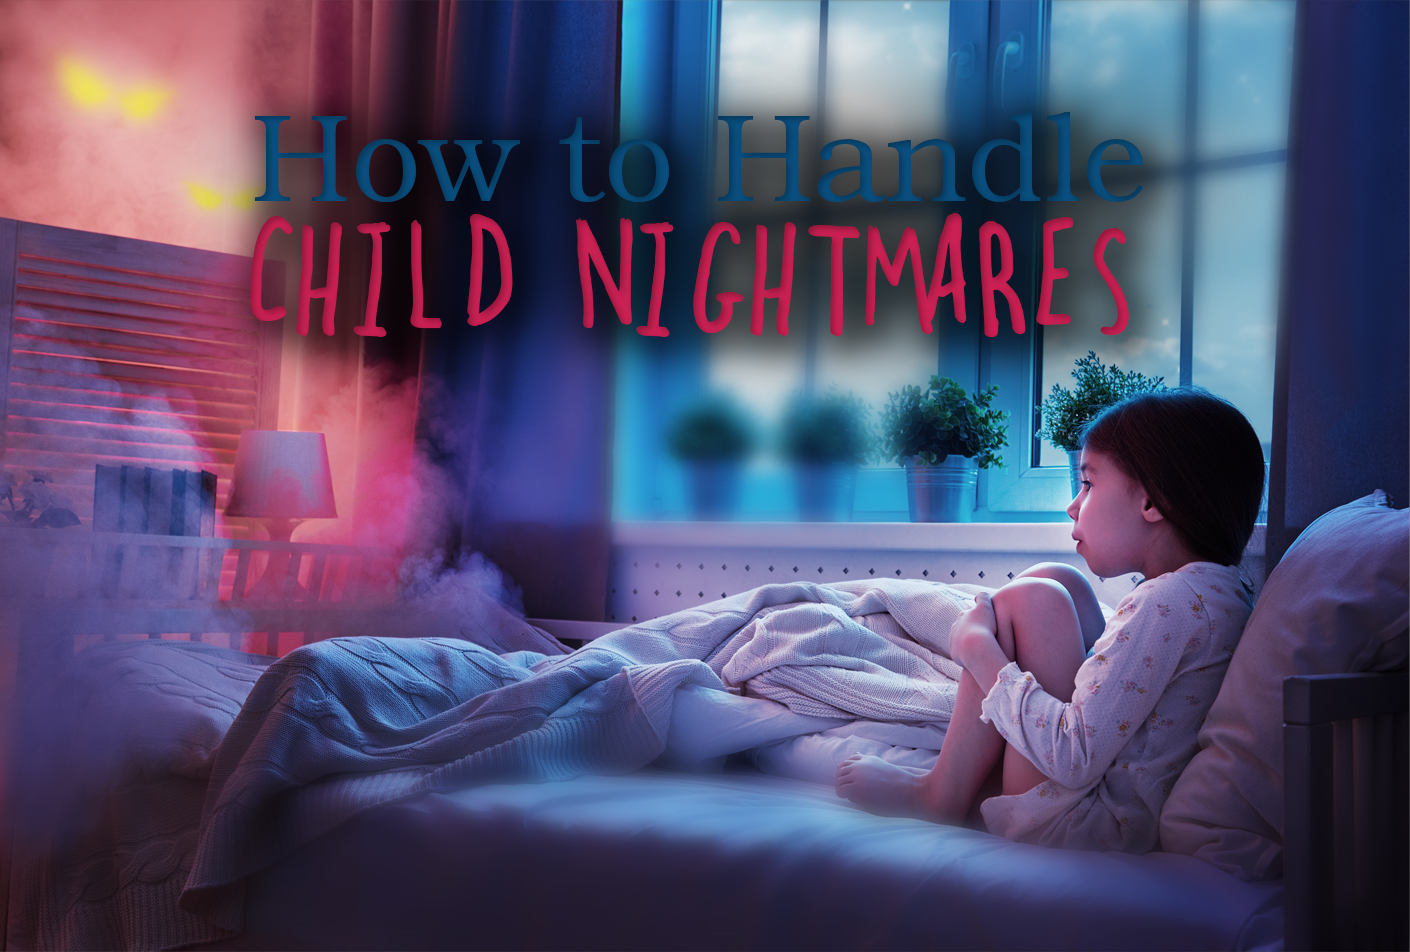 How to Handle Child Nightmares